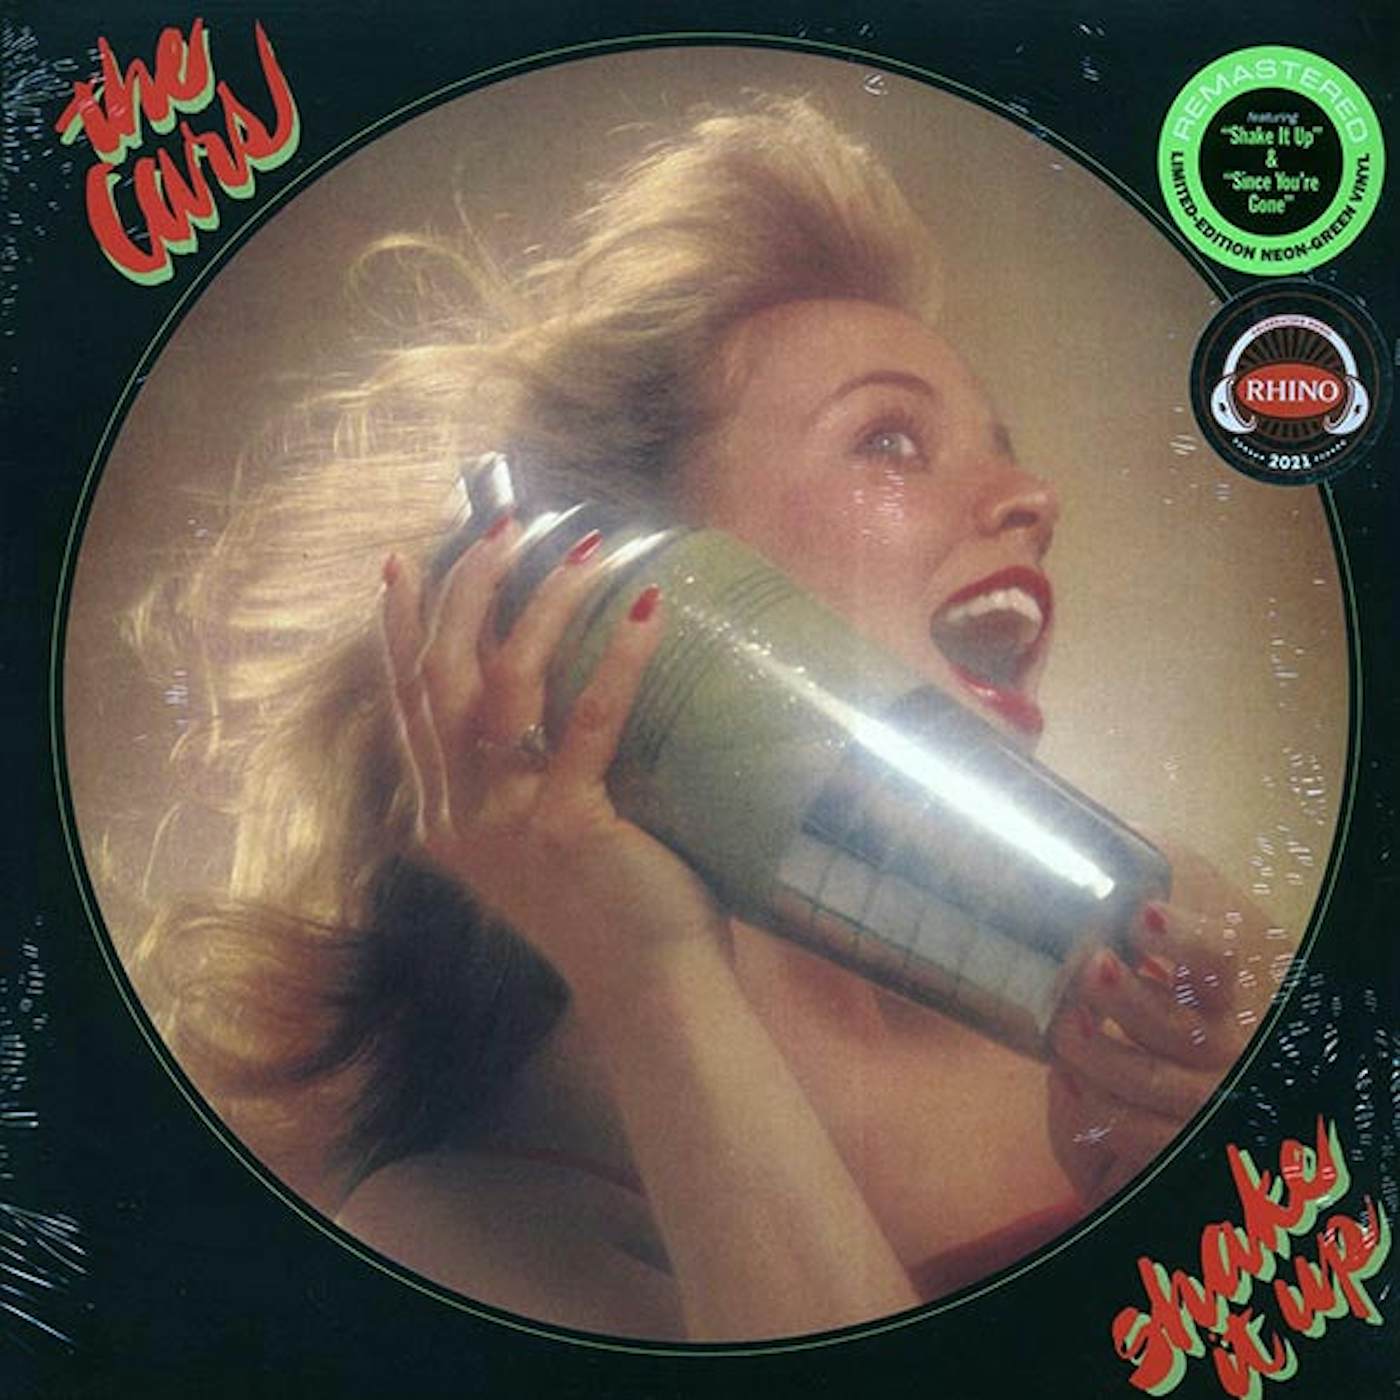 The Cars  LP -  Shake It Up (ltd. ed.) (remastered) (green vinyl)